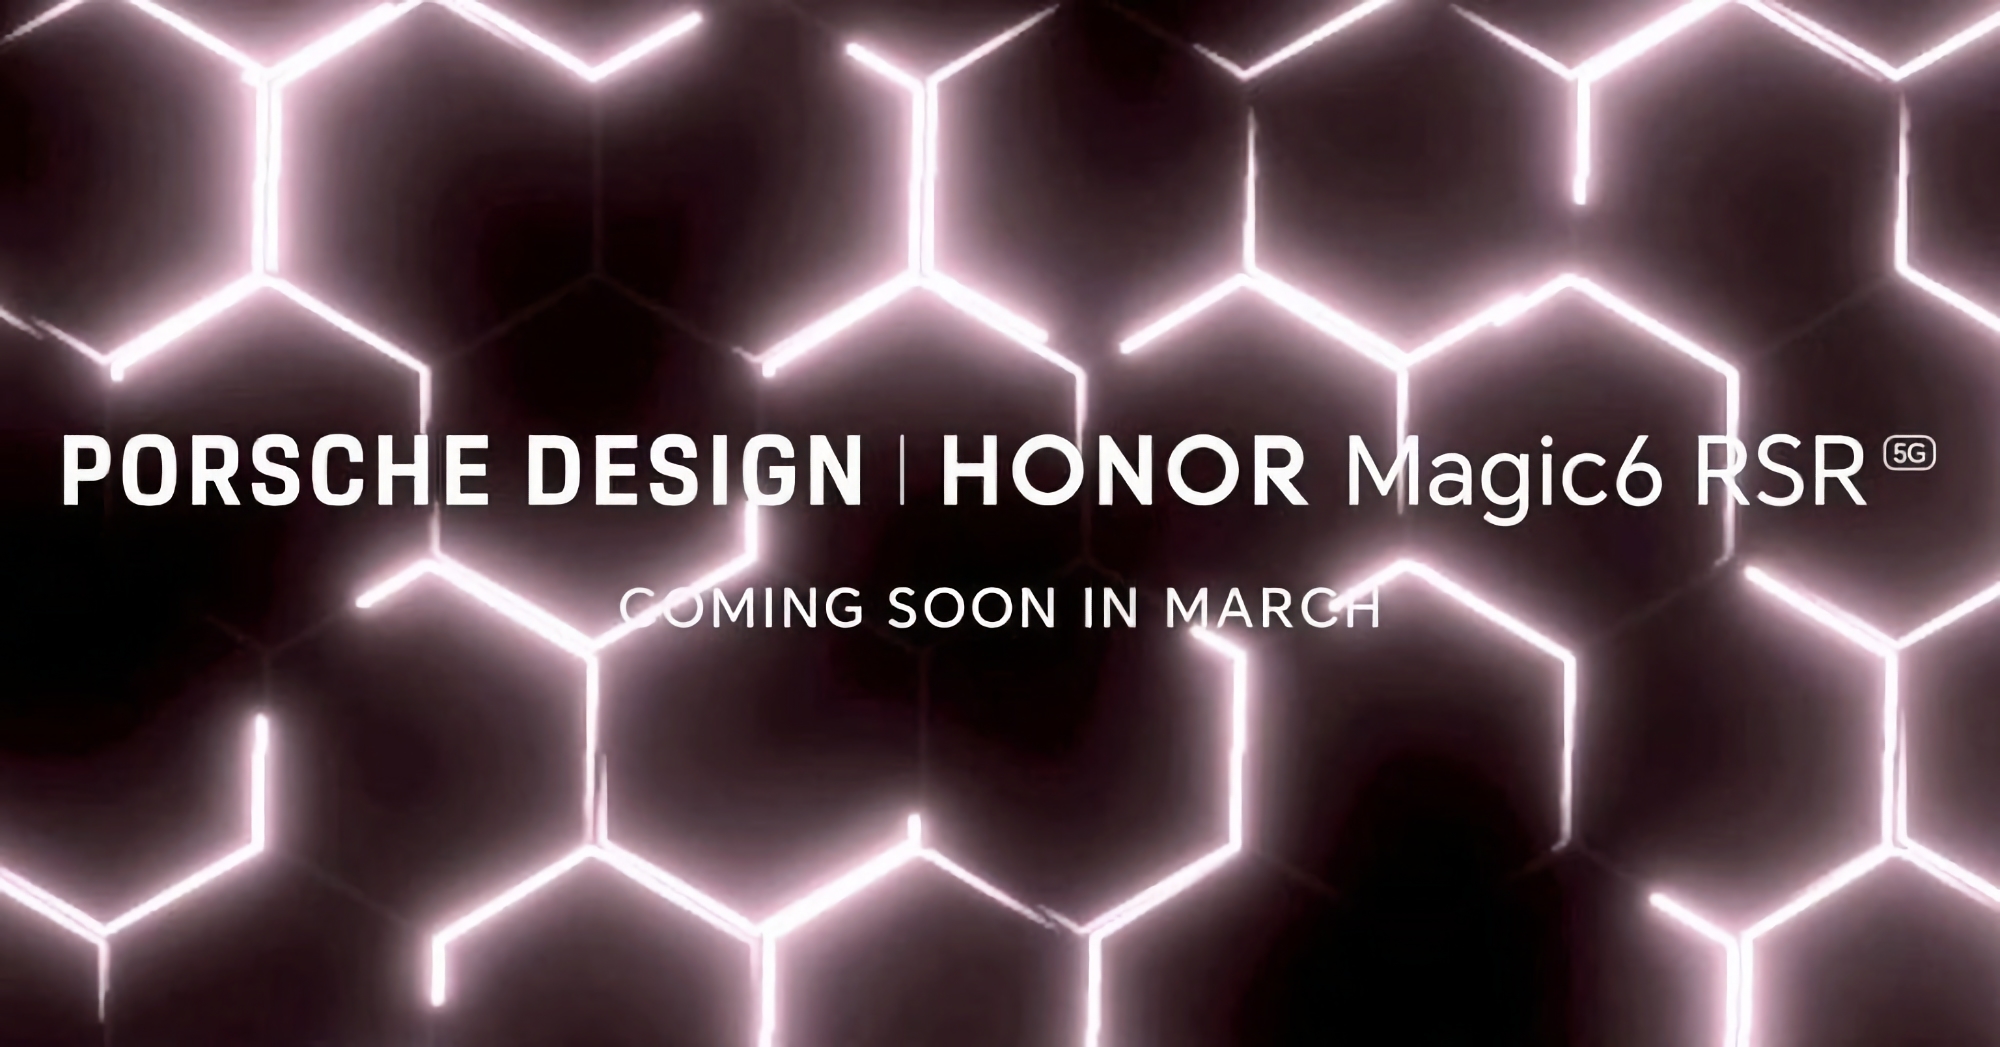 Honor presenterar Magic 6 RSR Porsche Design i mars